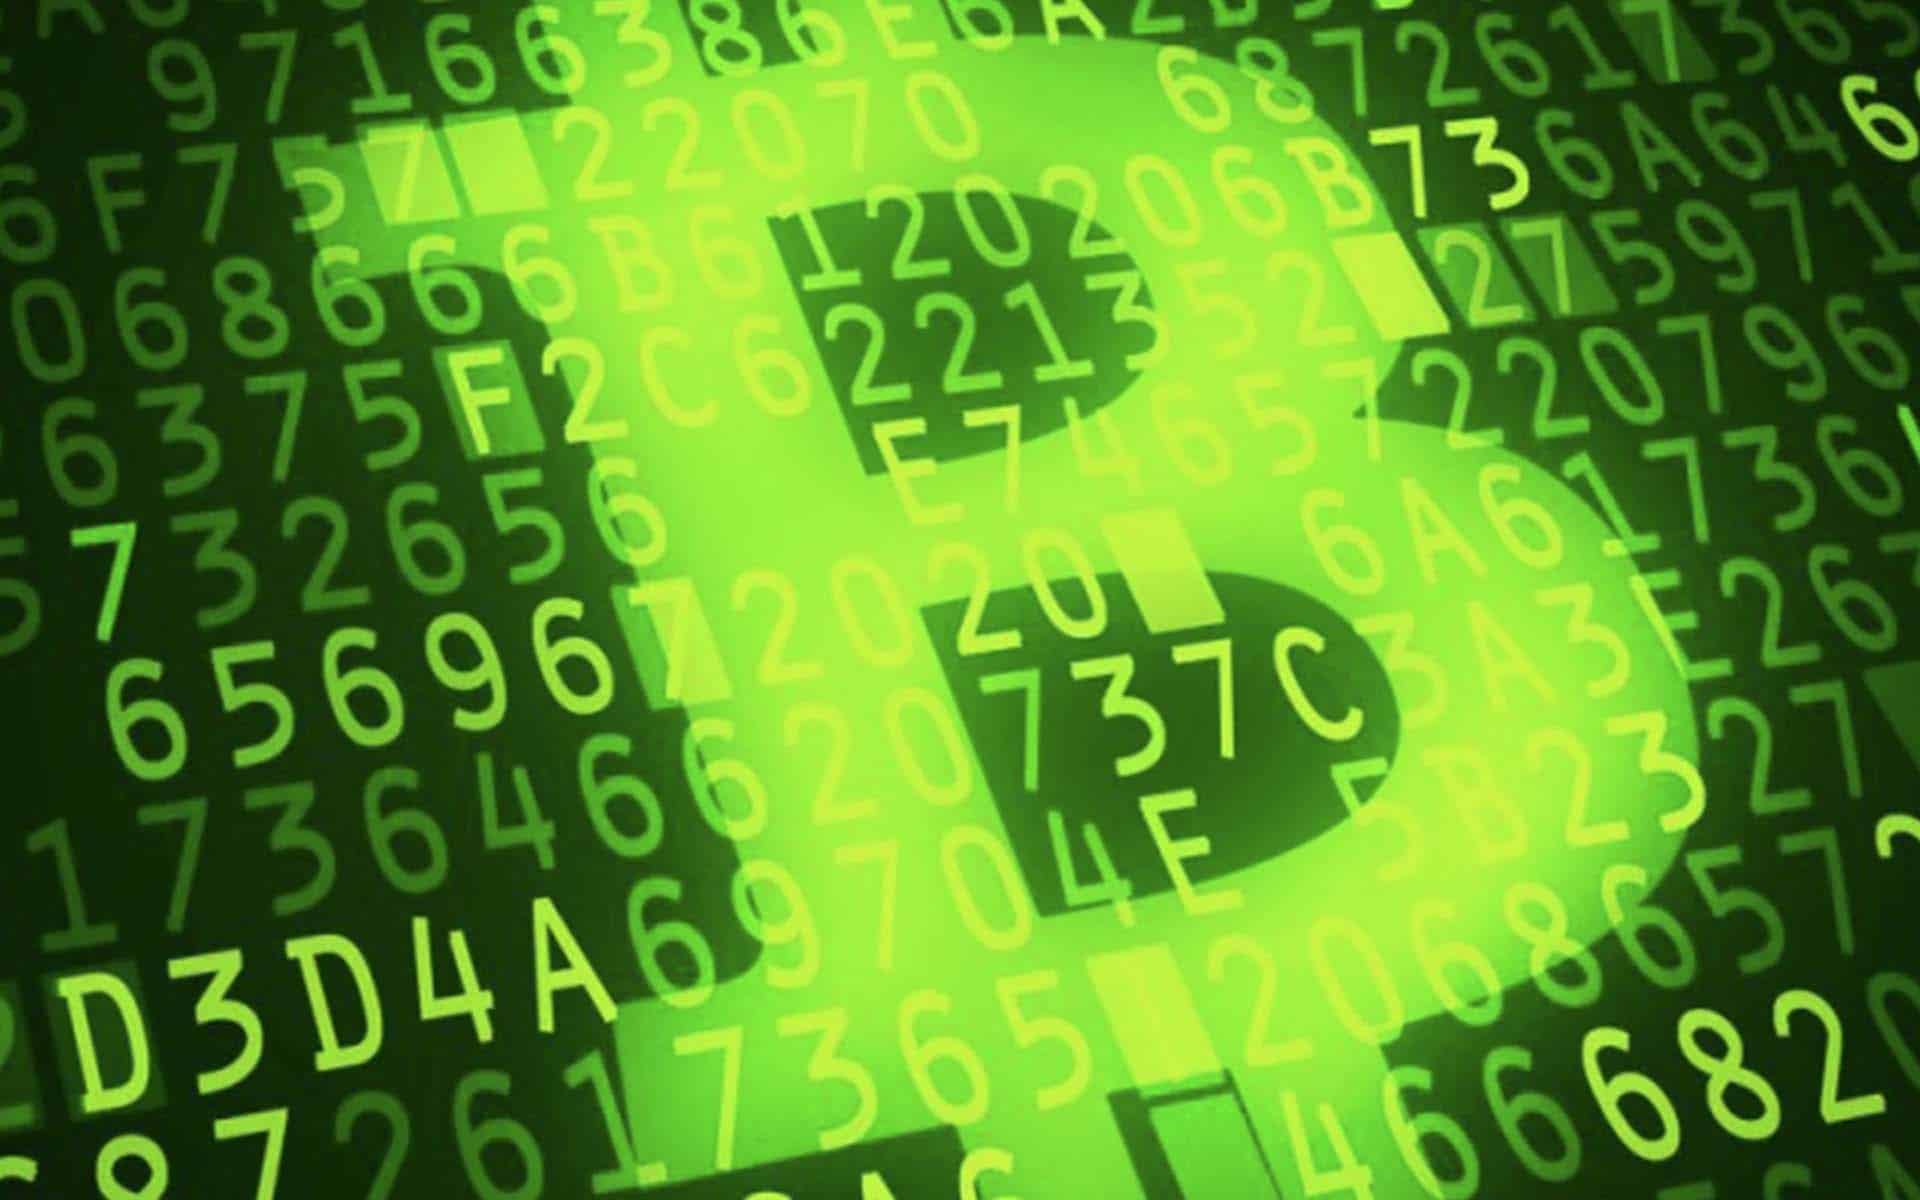 Roger Ver Announces a New $200 Million Bitcoin Cash Fund